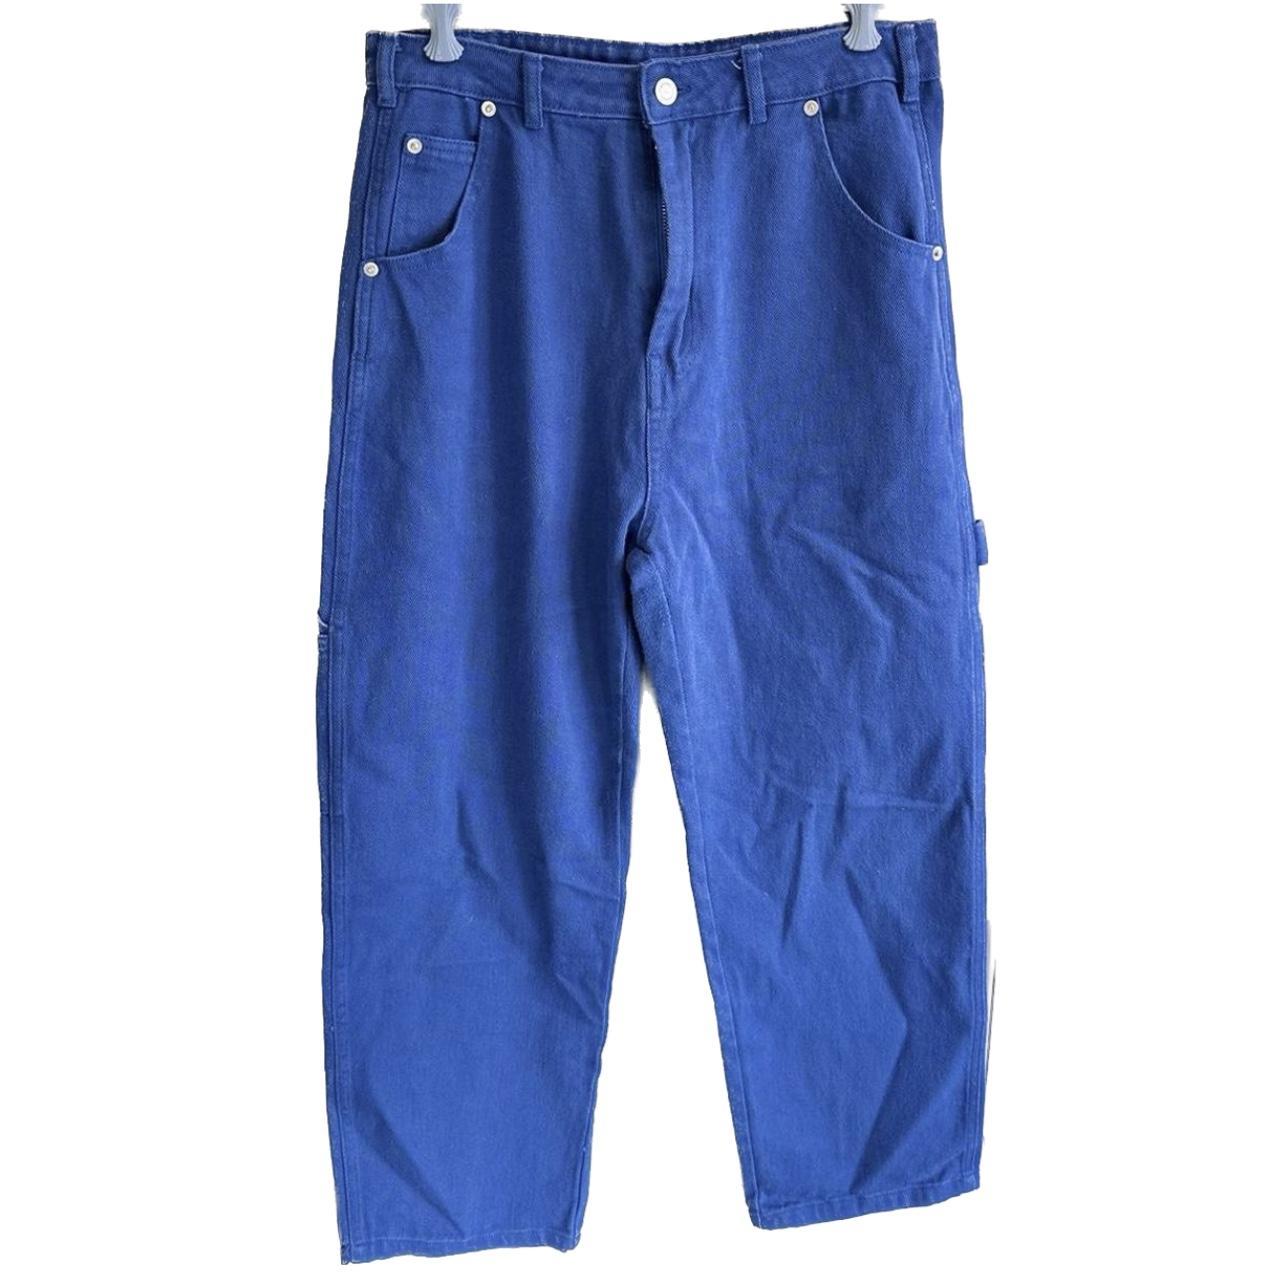 Urban Outfitters Women's Blue Trousers | Depop